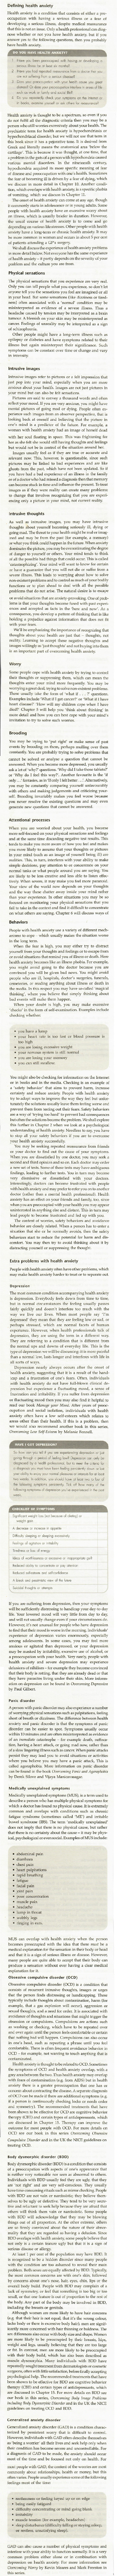 HA-Health-Anxiety-Defining-3-20-Section-17.jpg